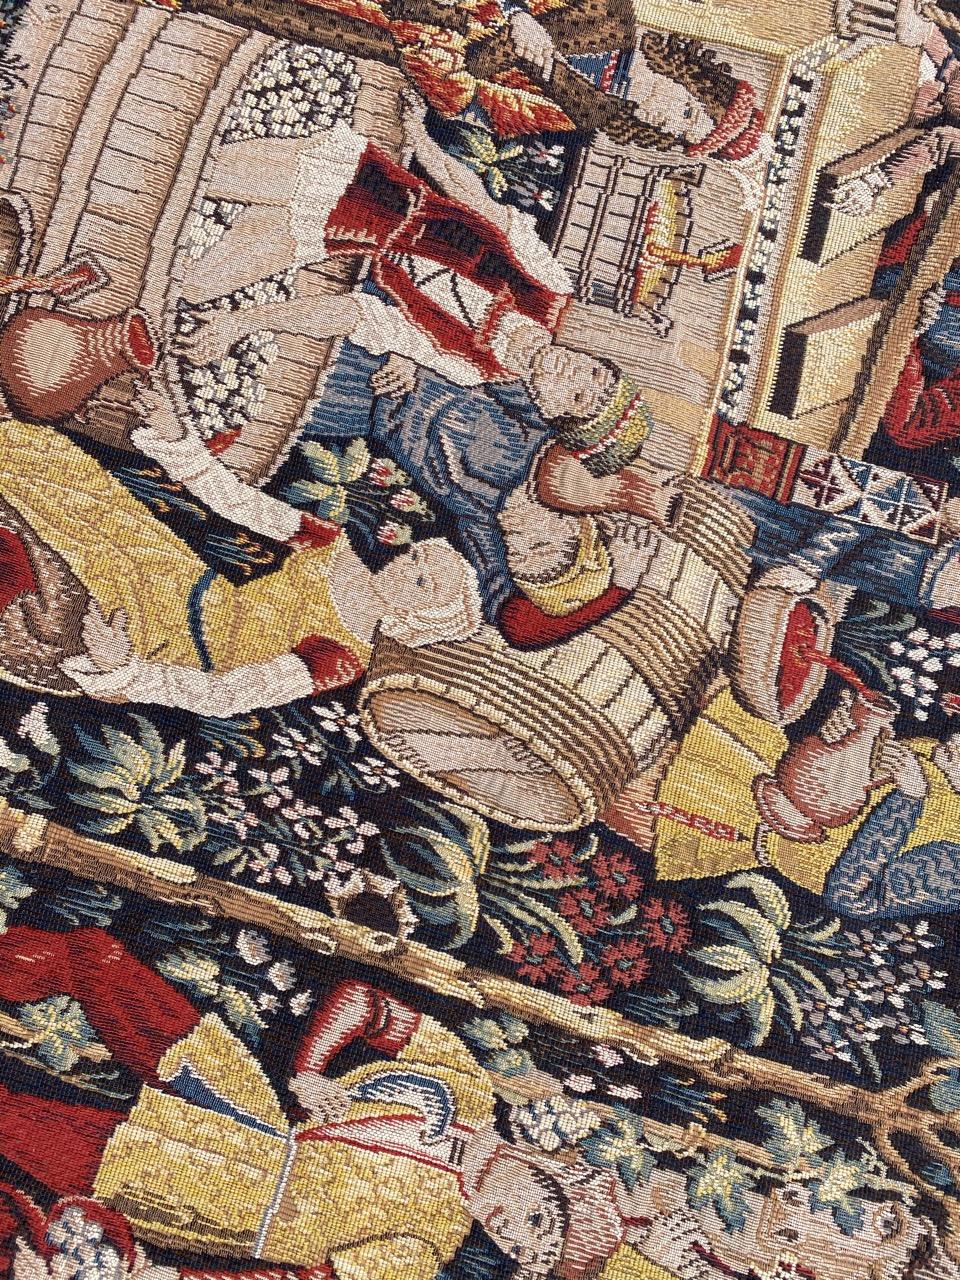 Wonderful Vintage Jaquar Tapestry Aubusson Style Medieval Design 1